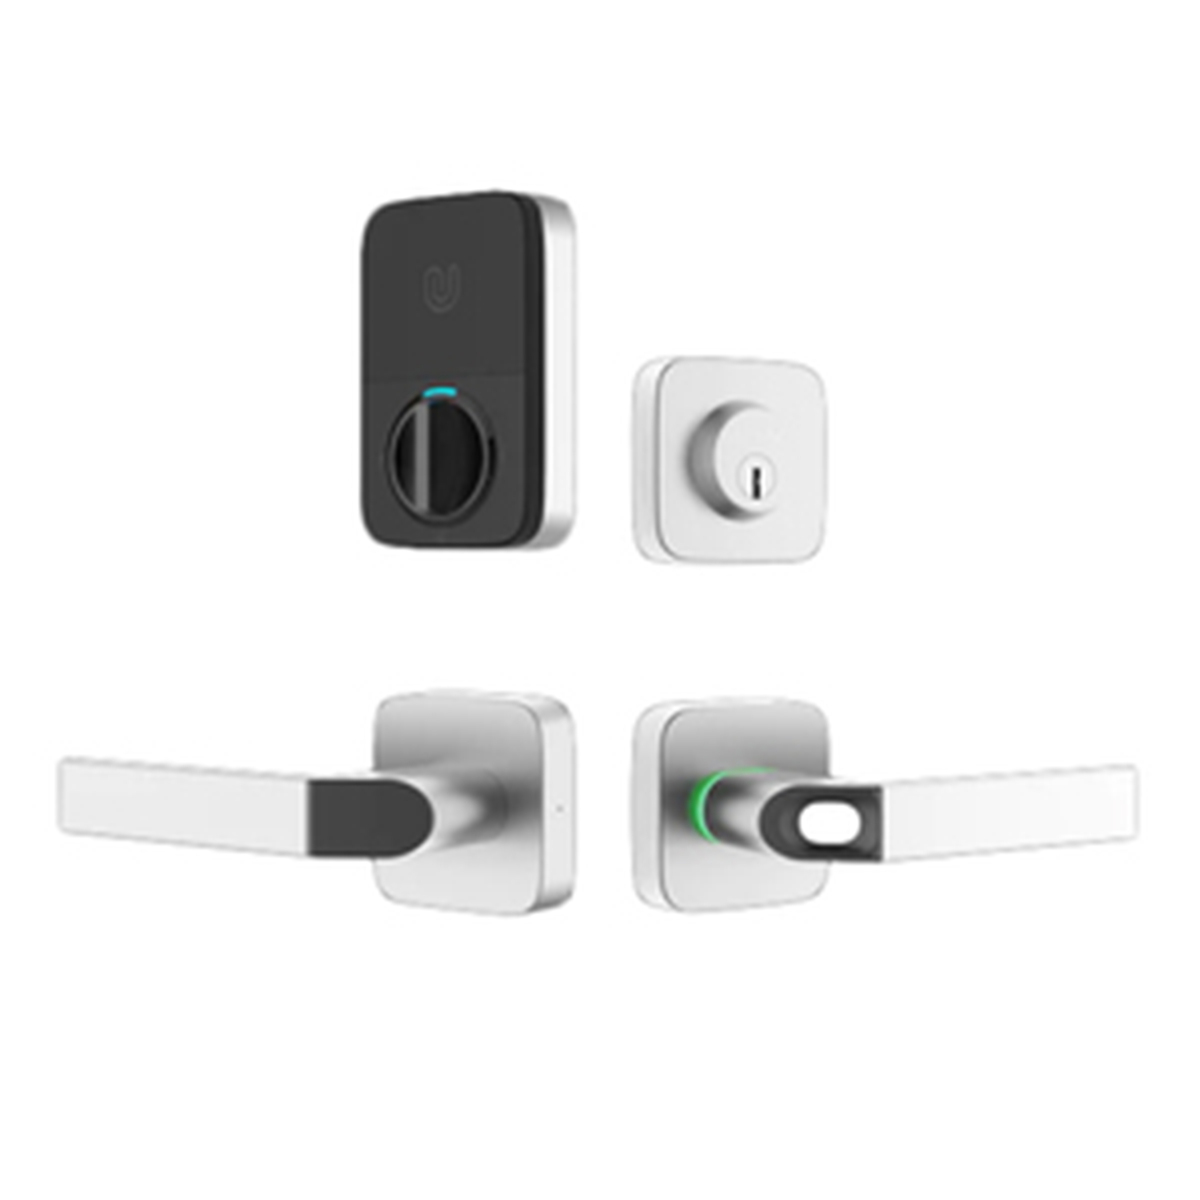 Ultraloq Combo Bluetooth Enabled Fingerprint & Key Fob Two-Point Smart Lock